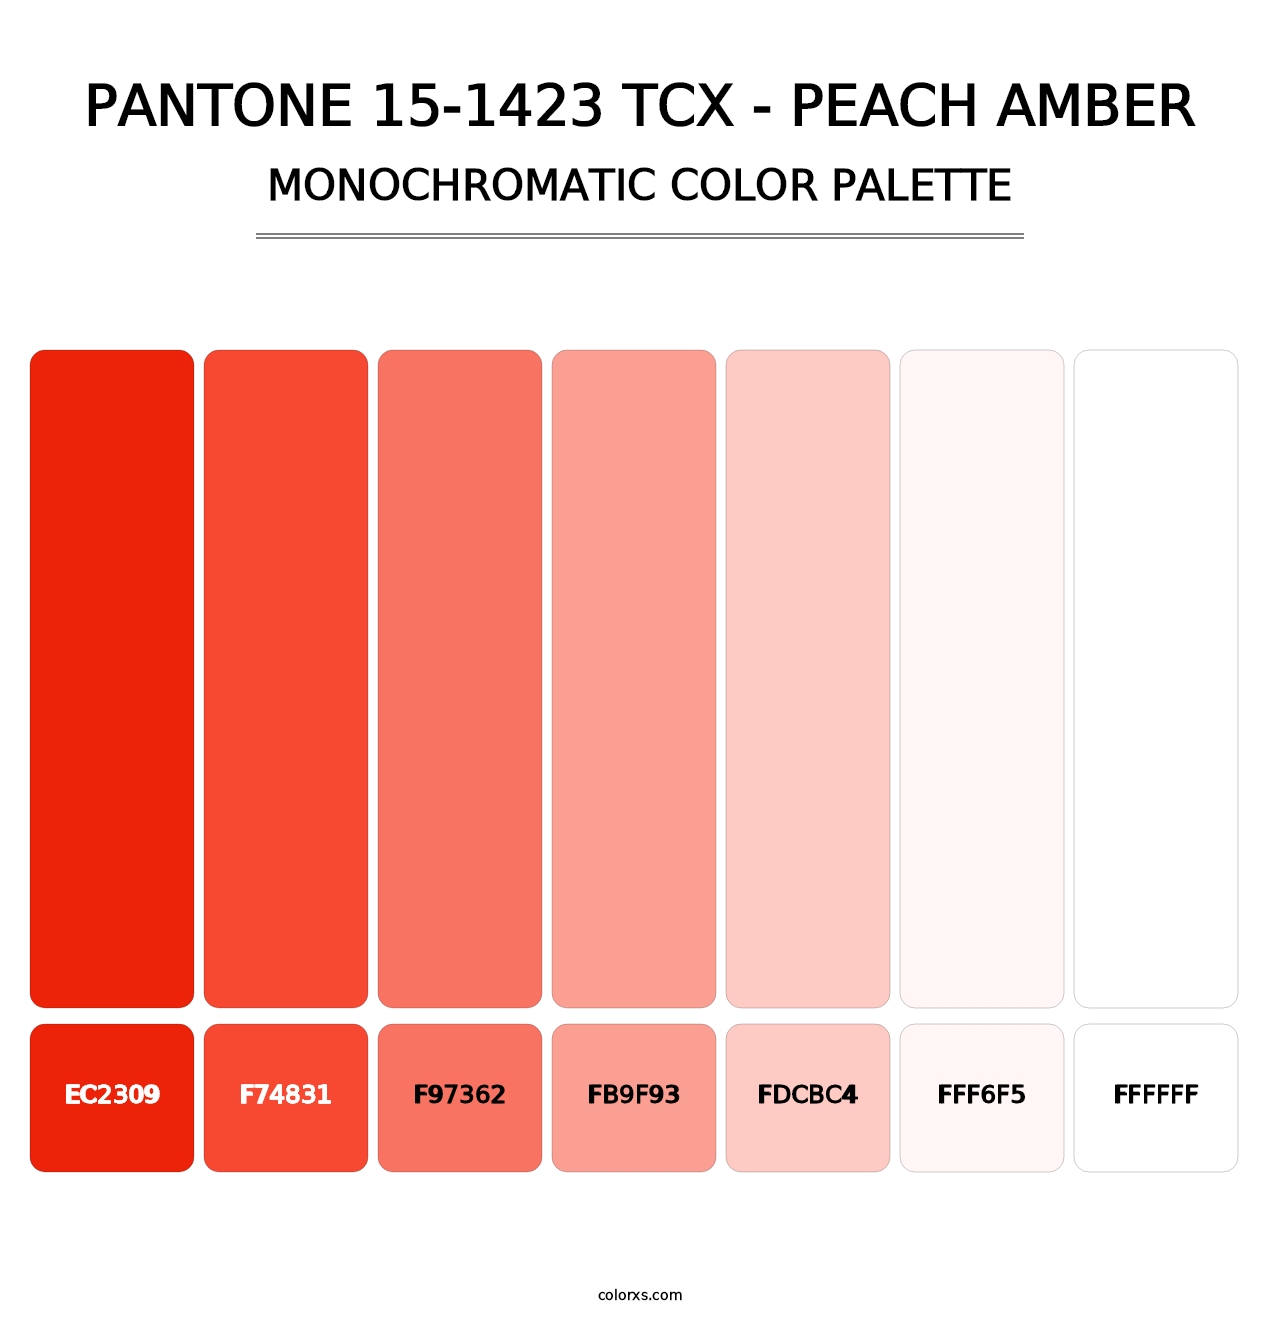 PANTONE 15-1423 TCX - Peach Amber - Monochromatic Color Palette